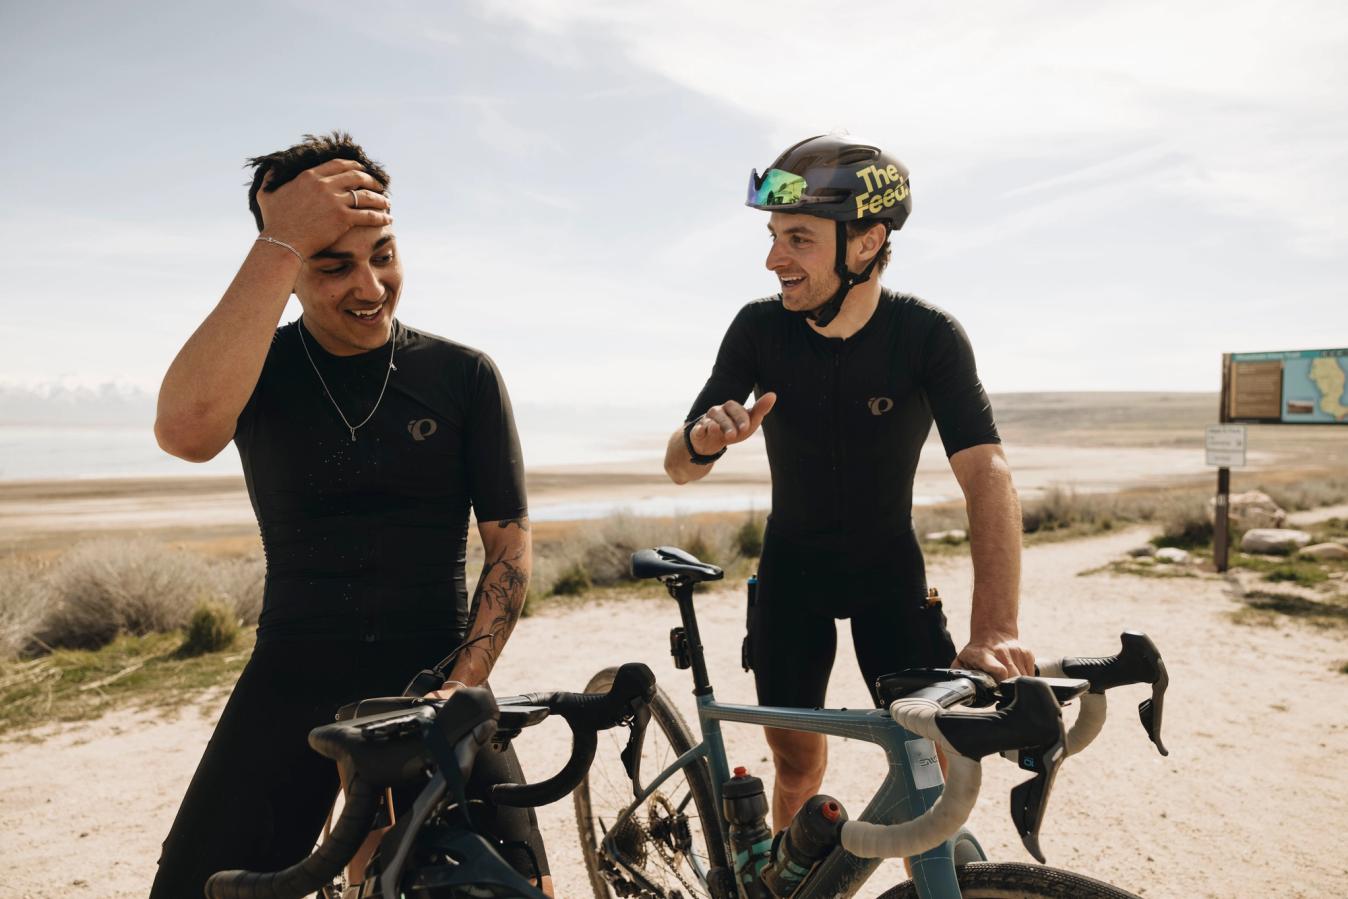 Alexey Vermeulen and Neruda Diaz, one of the Phase 2 athletes, cracking jokes during a ride